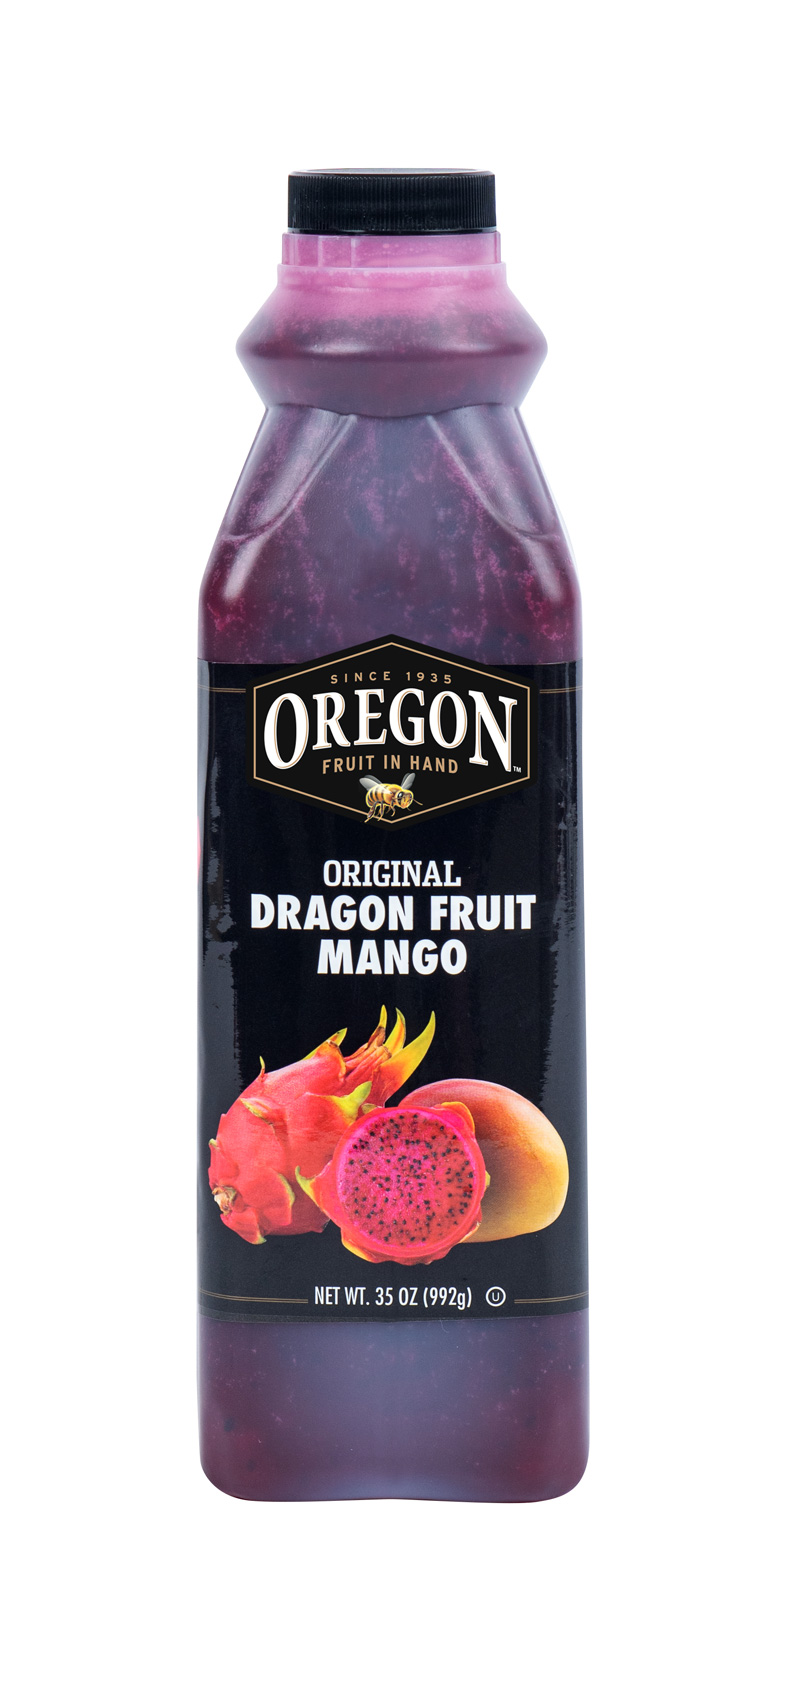 Dragon Fruit Mango